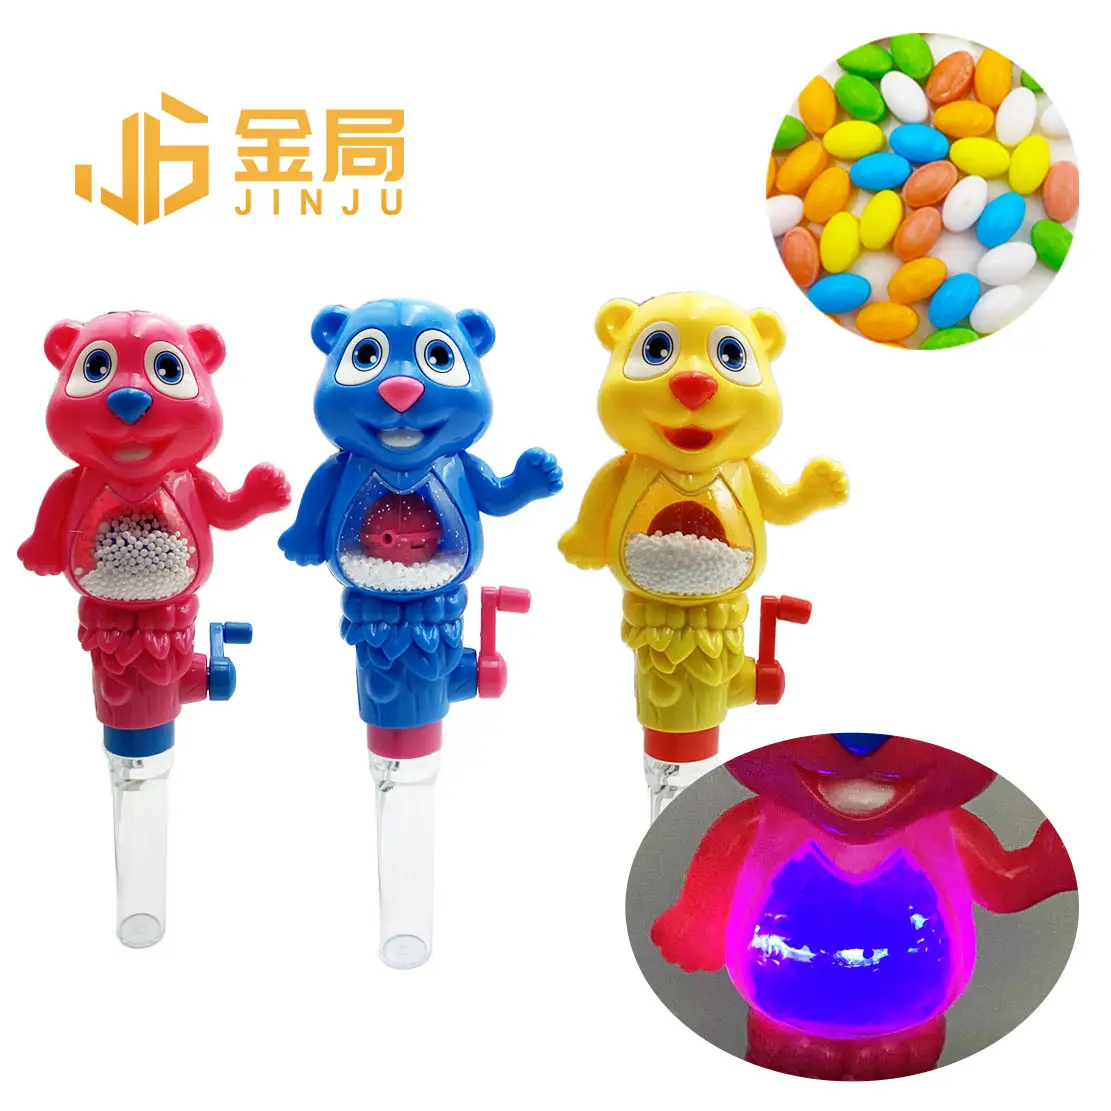 Venta caliente mano luz nieve oso plástico caramelo juguetes colorido mano operado iluminación juguete